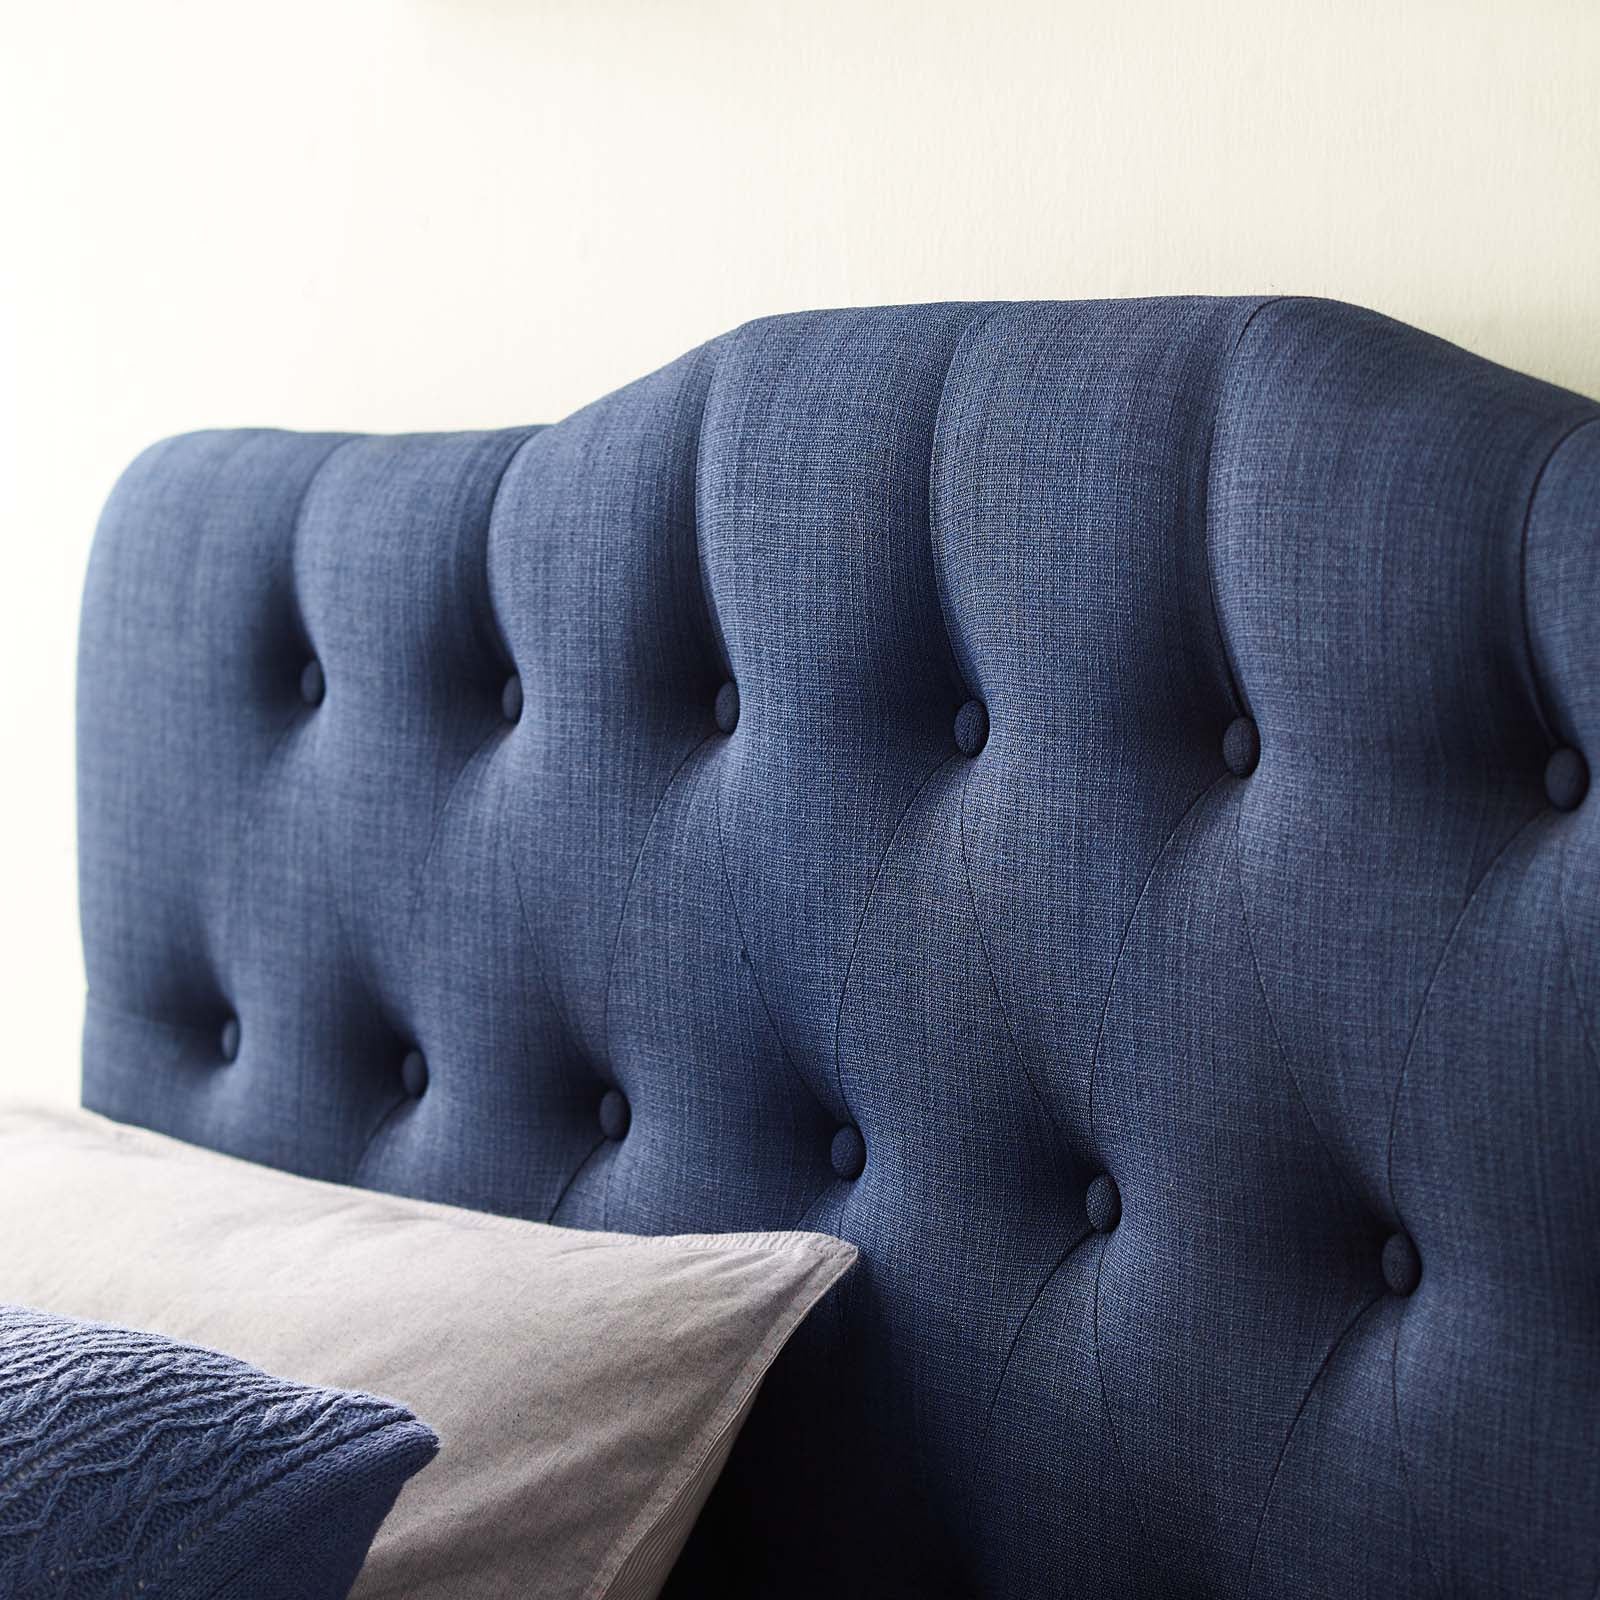 Annabel King Upholstered Fabric Headboard - East Shore Modern Home Furnishings